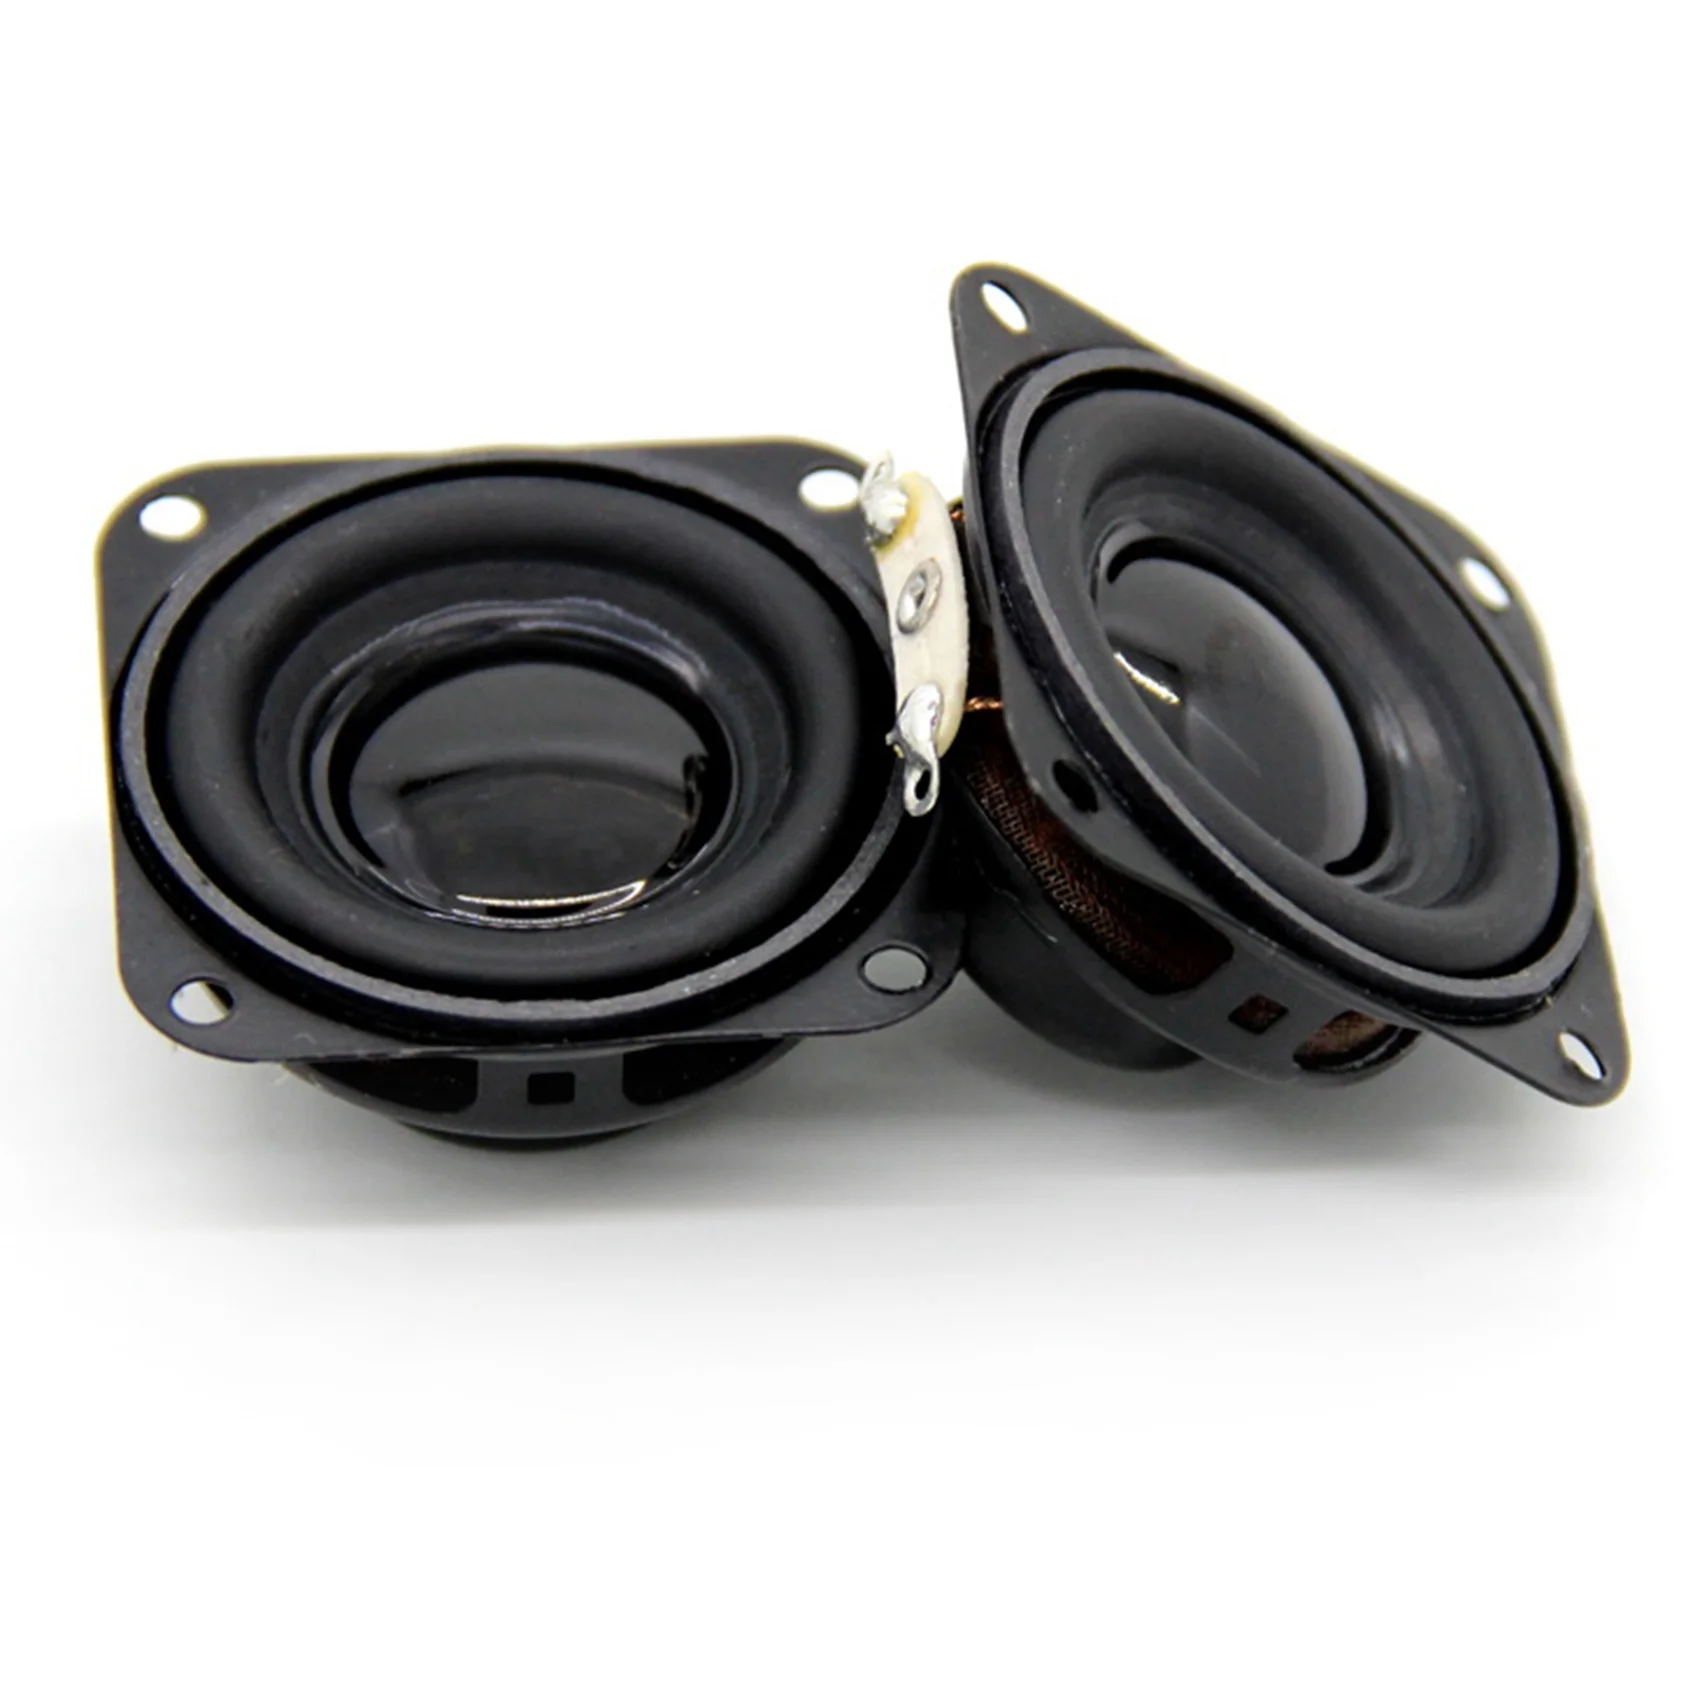 

2PCS 1.5 Inch Audio Speaker 4Ω 3W 40mm Bass Multimedia Loudspeaker DIY Sound Speaker with Fixing Hole Theater